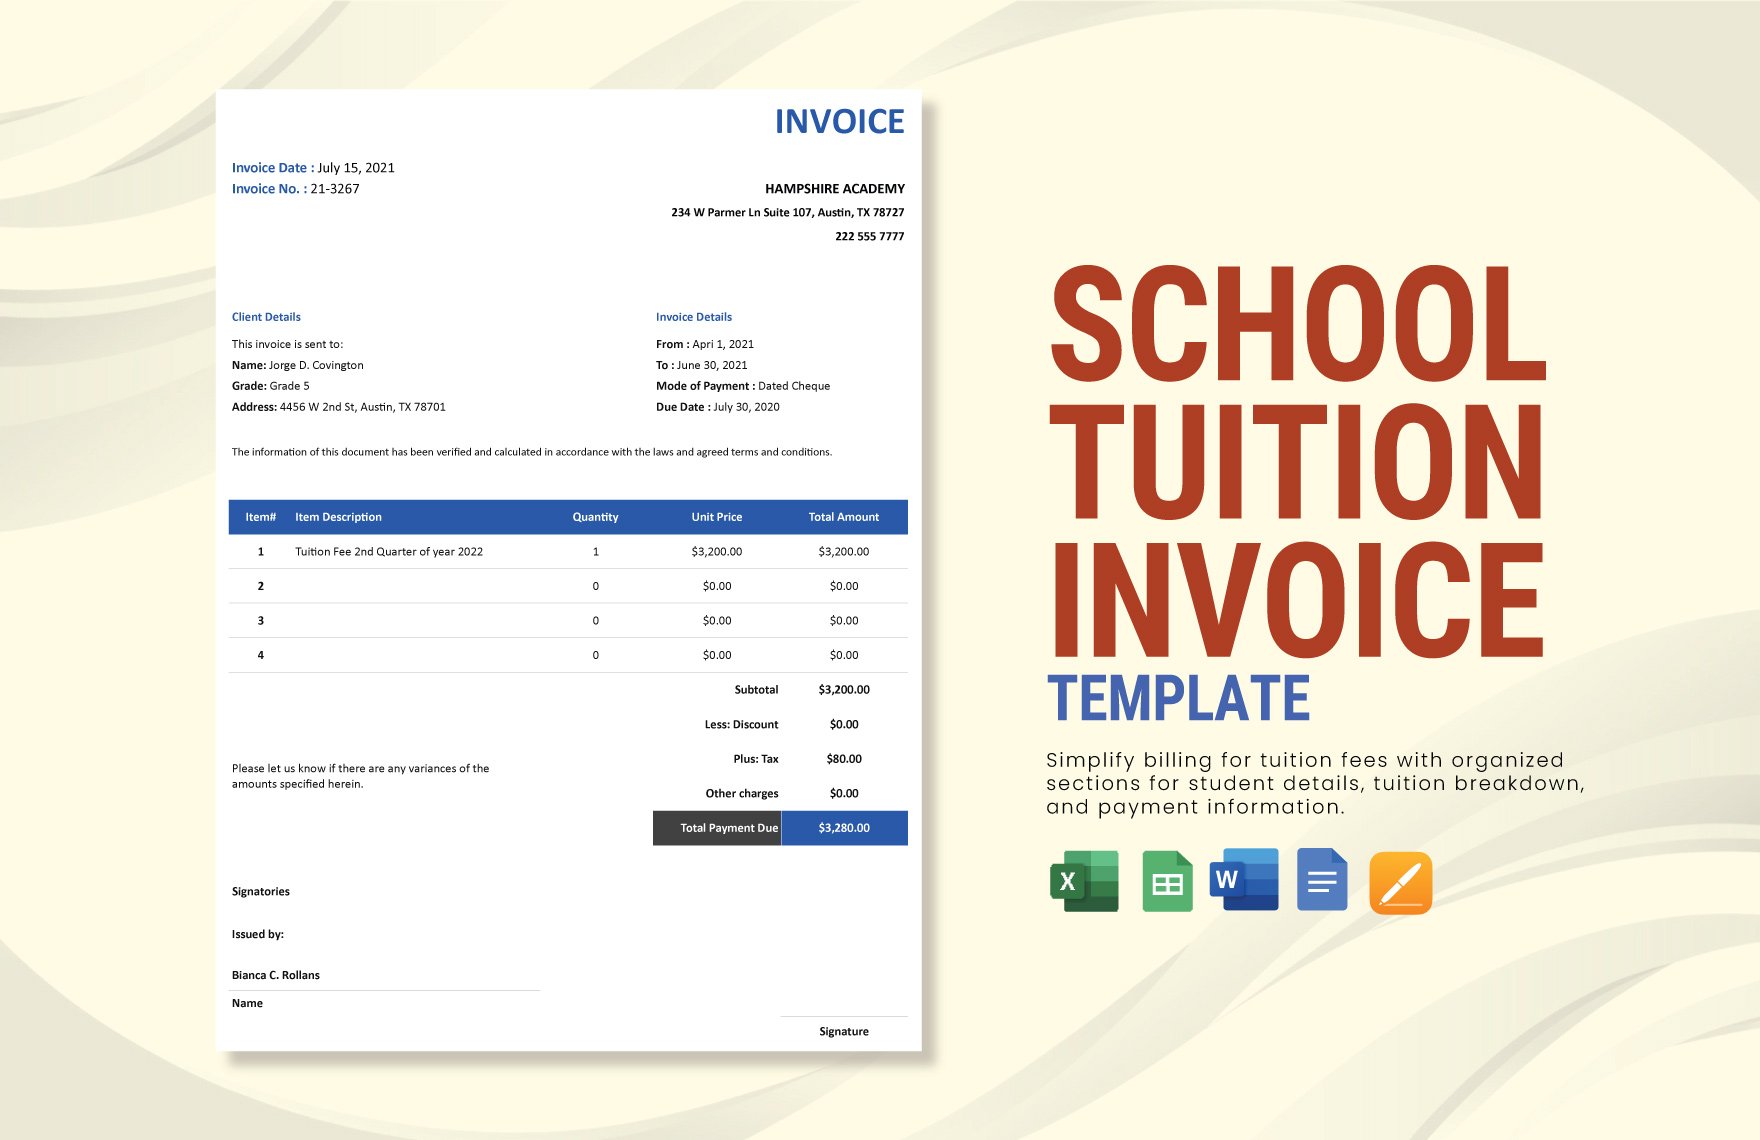 School Tuition Invoice Template